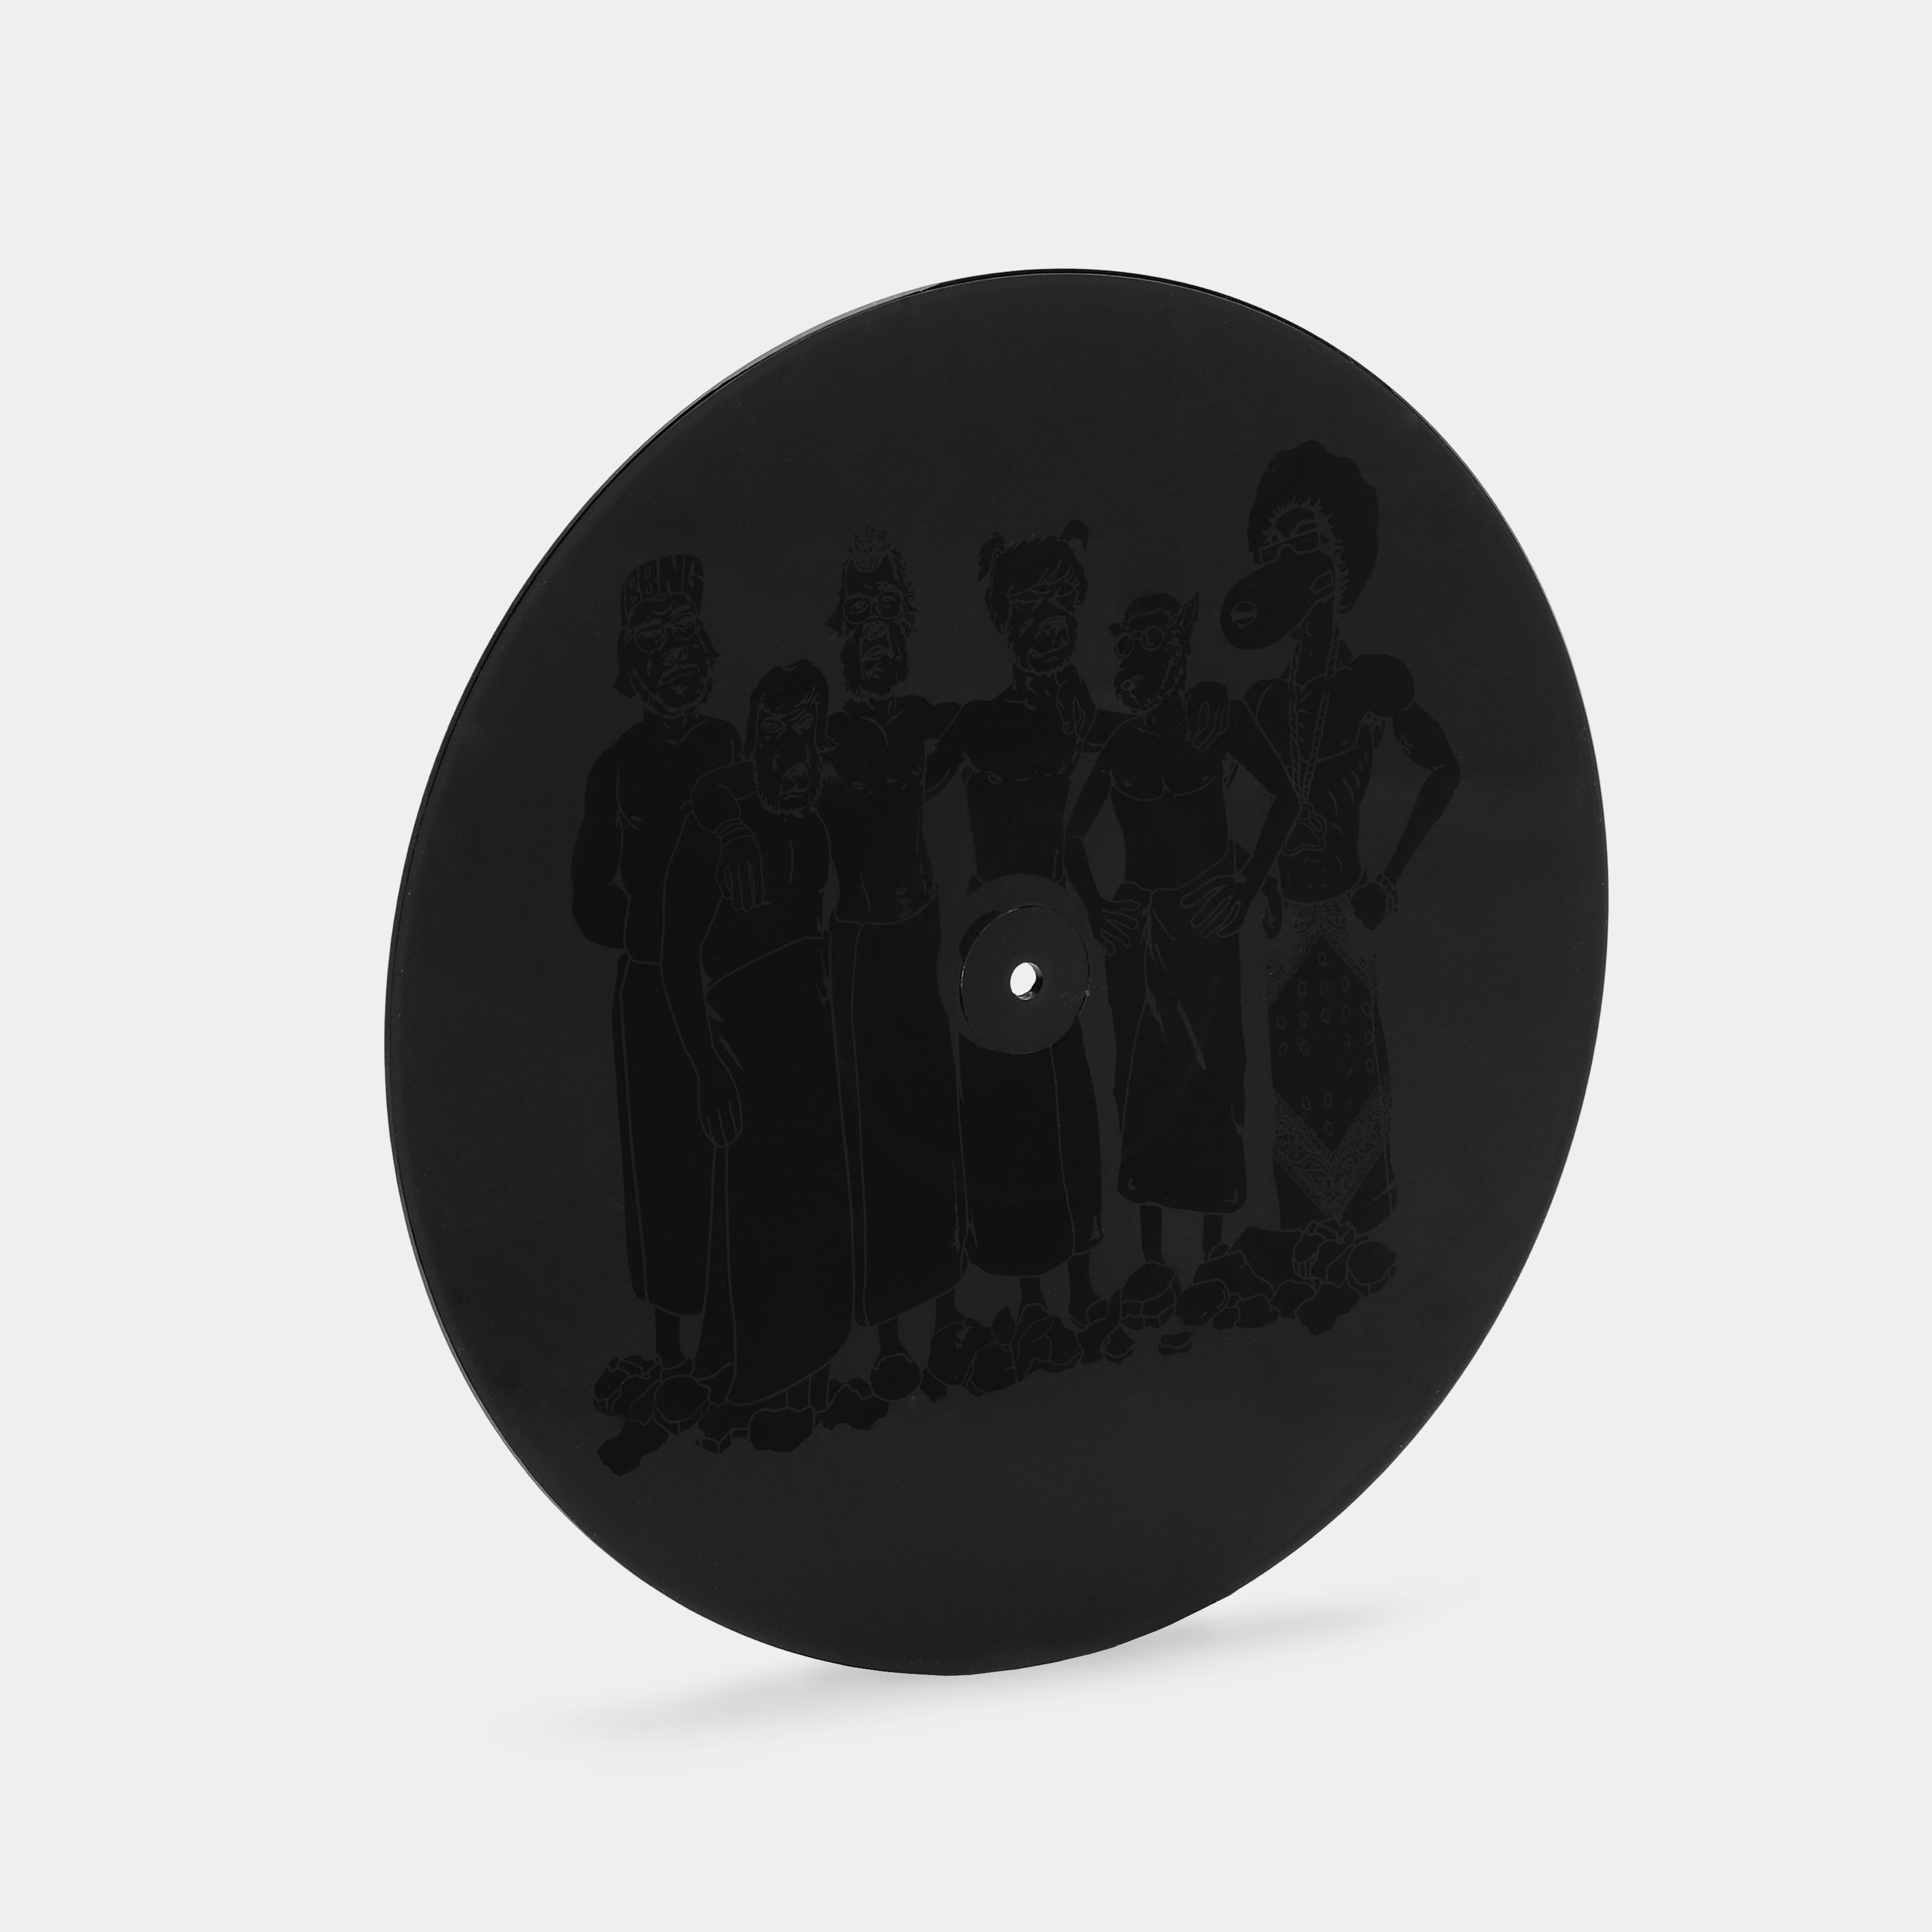 BADBADNOTGOOD, KAYTRANADA & Snoop Dogg - Lavender (Nightfall-Remix) 12" Single Vinyl Record